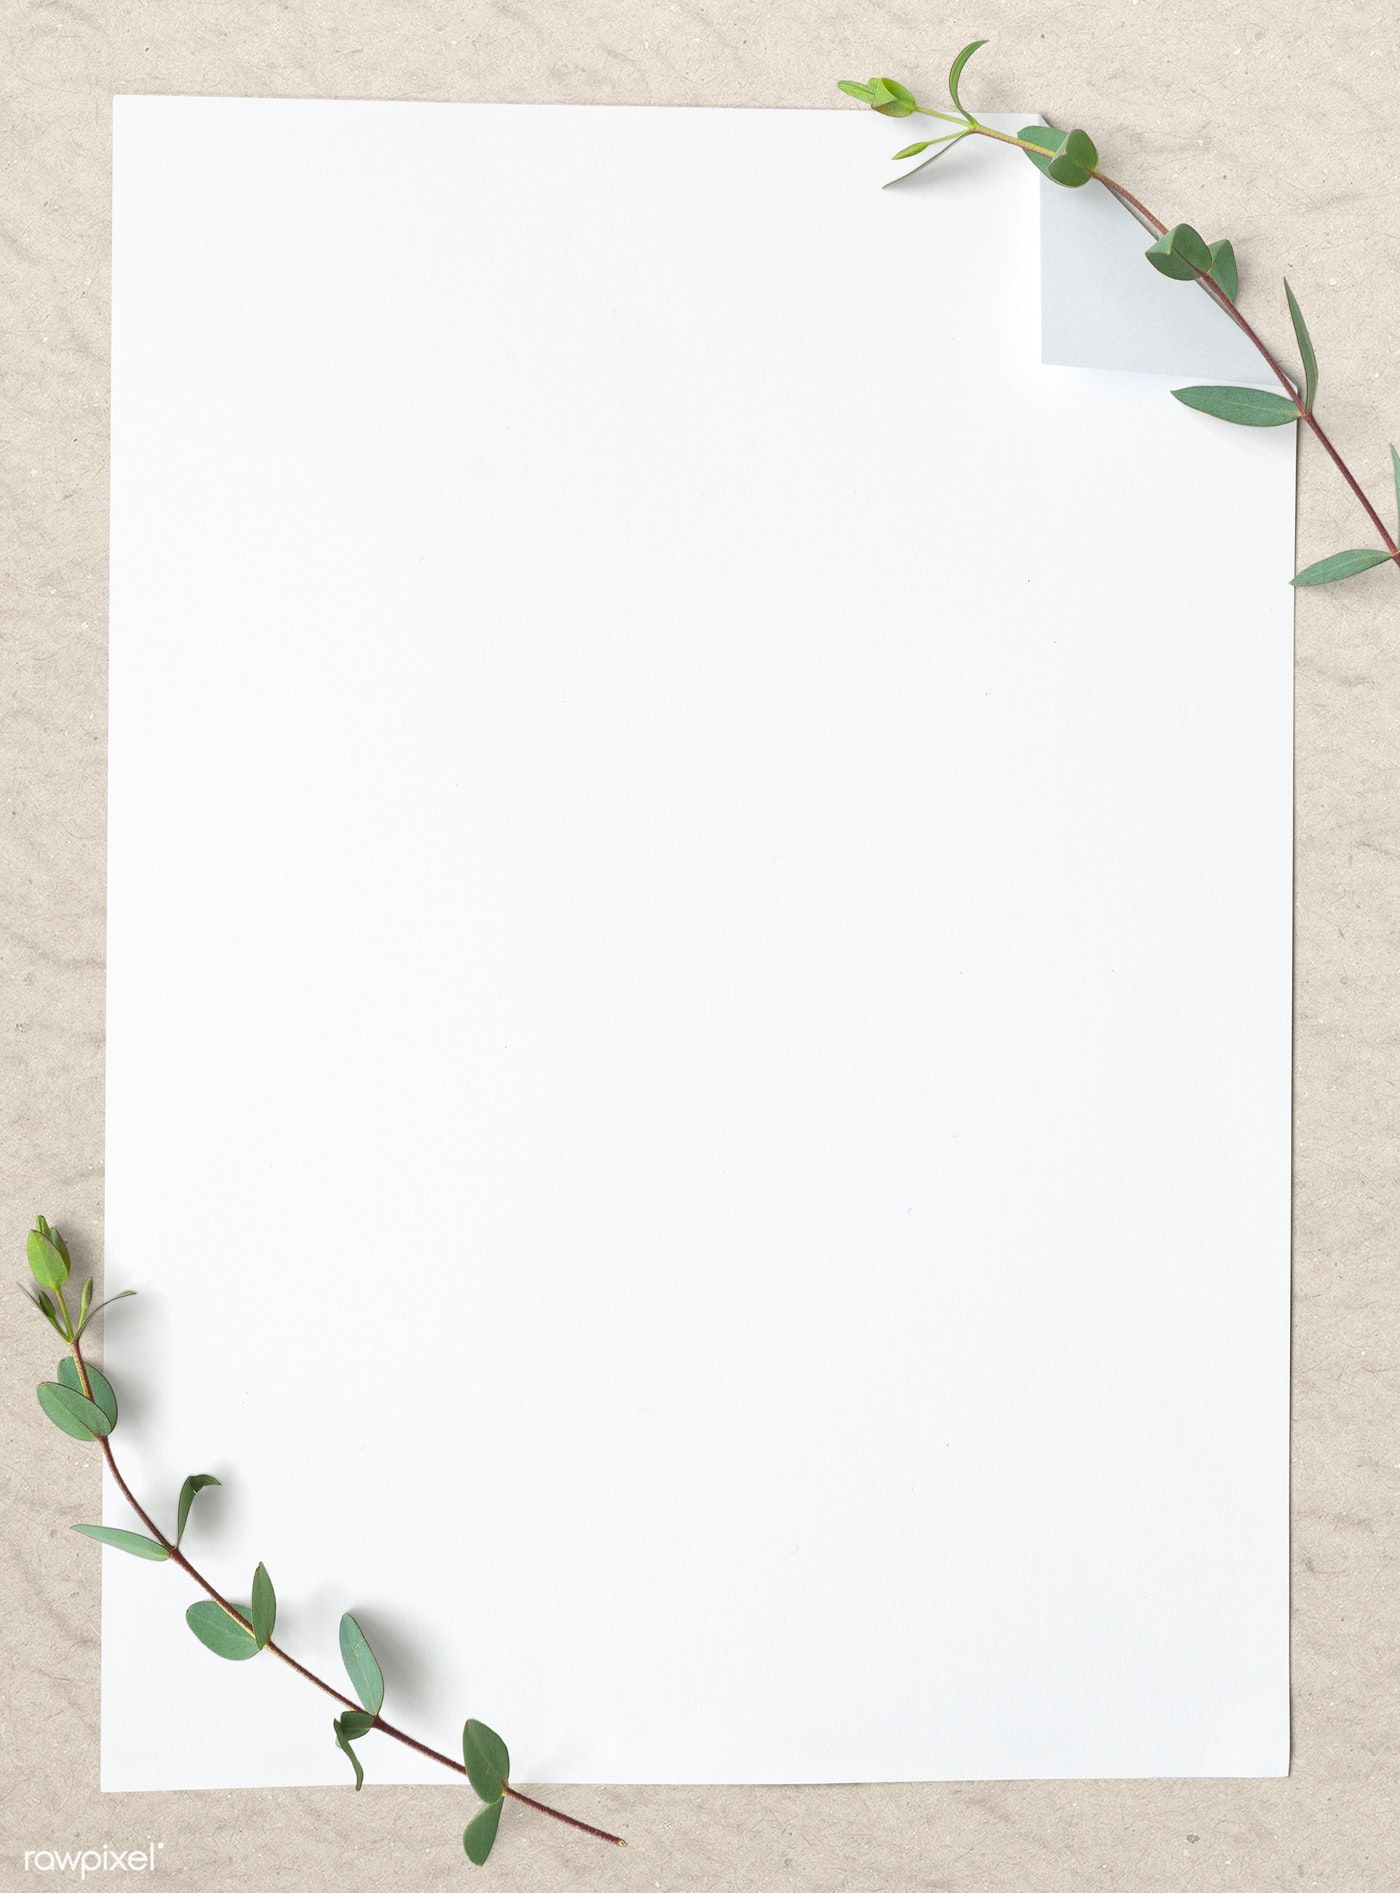 Blank plain white paper. premium image / KUTTHALEEYO. Paper , Flower background wallpaper, White background plain